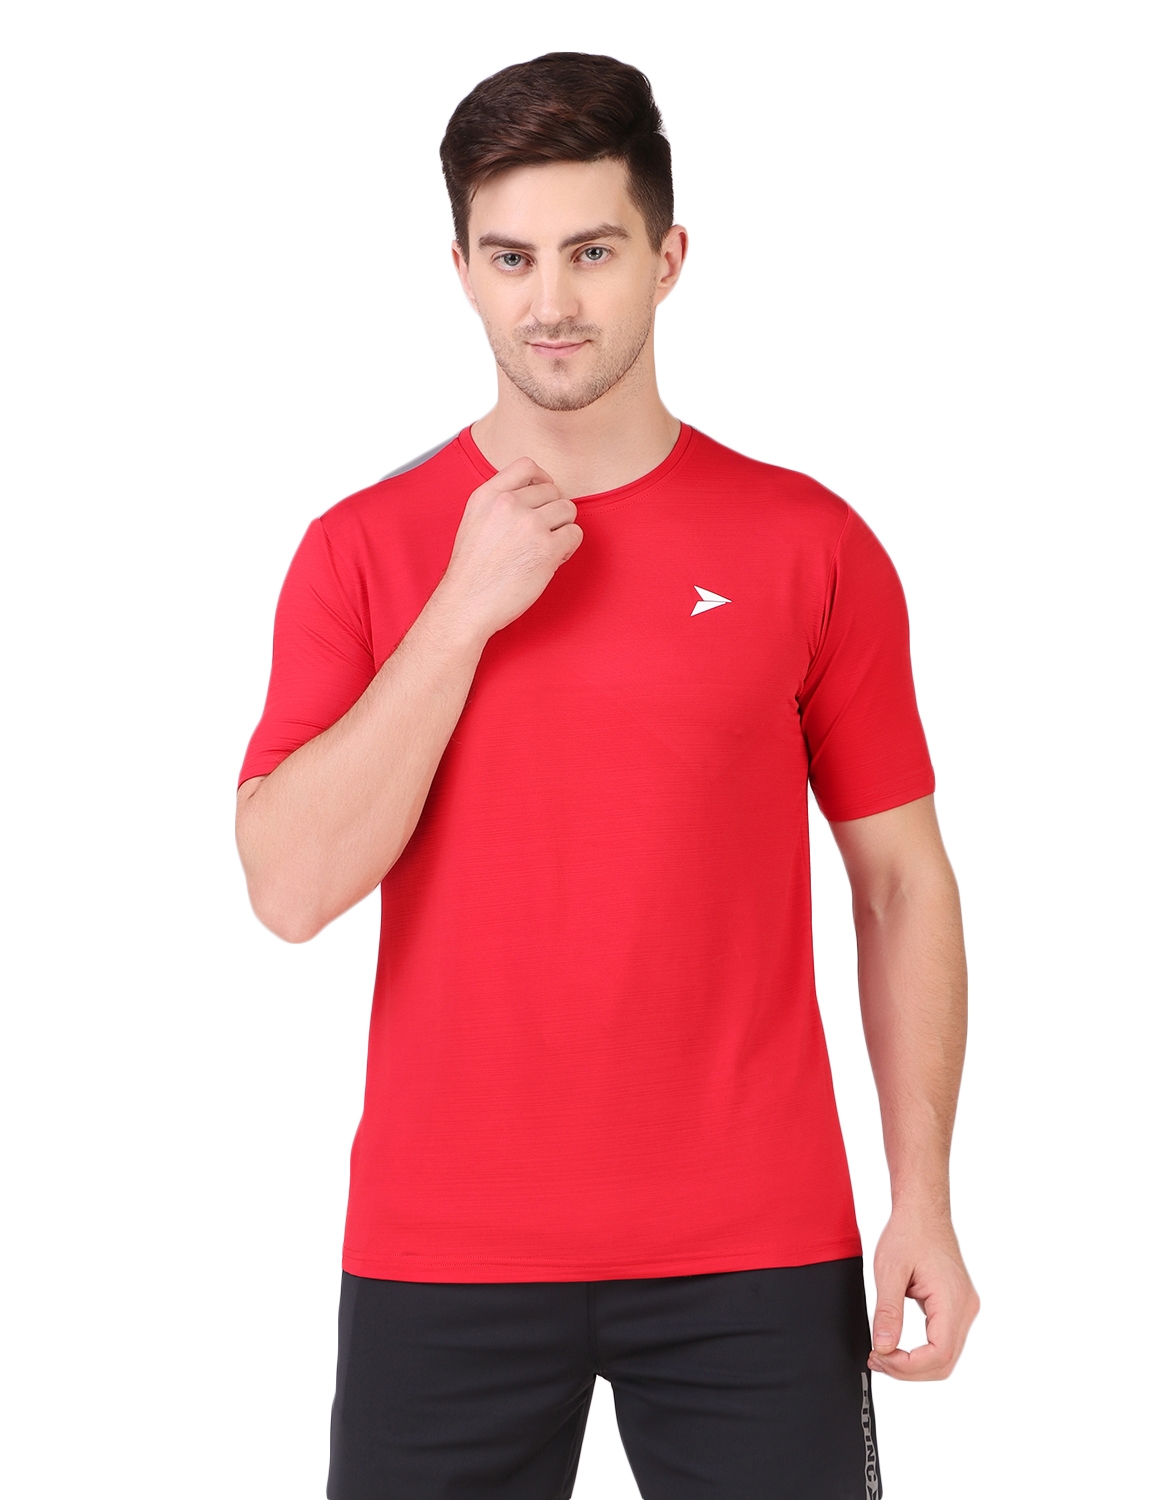 Fitinc | Fitinc Men's Round Neck Slimfit Gym & Active Sports Red T-Shirt 0